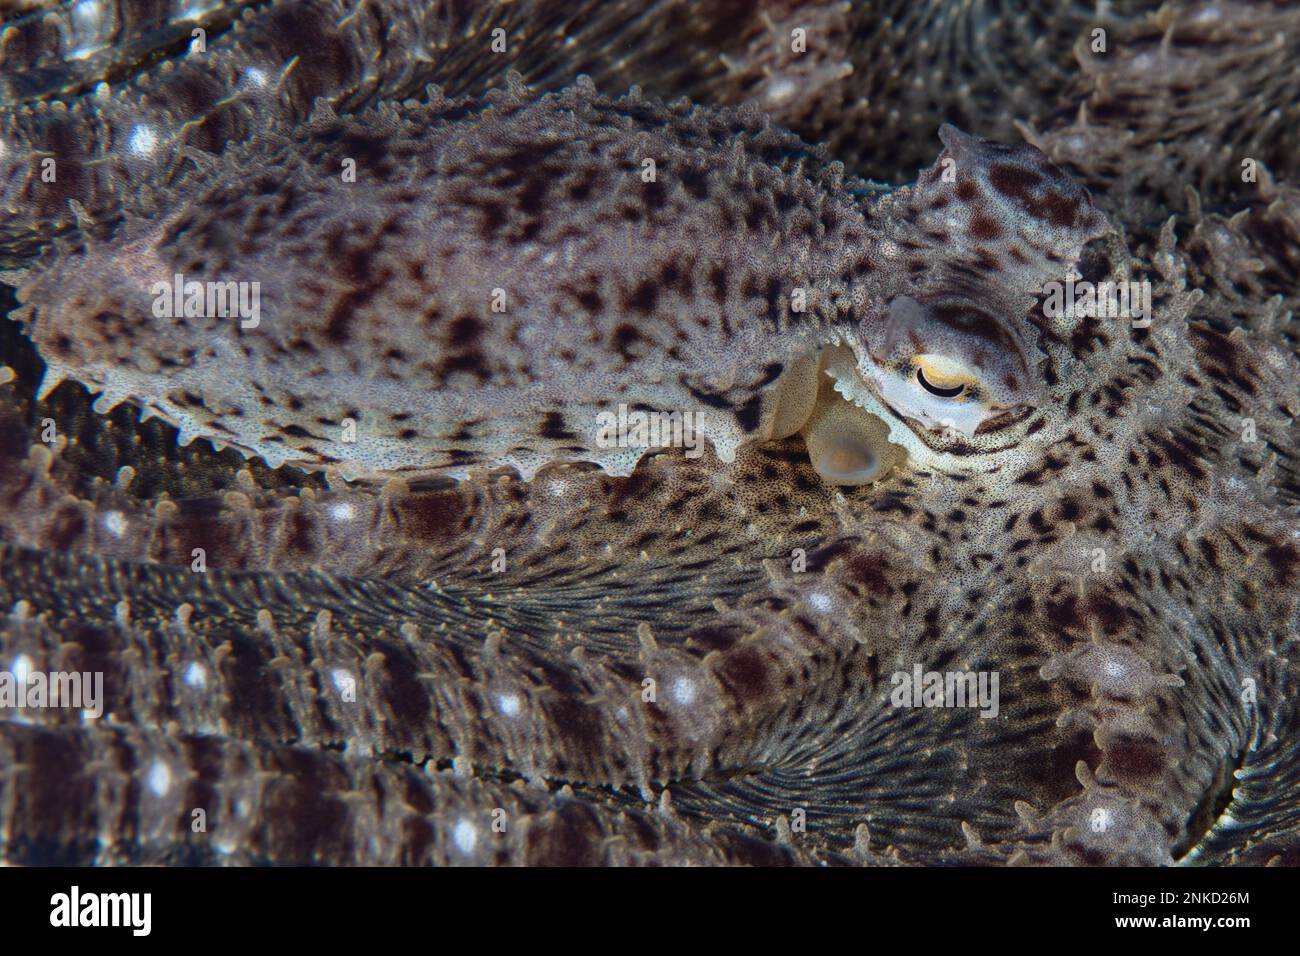 Ein imitierter Oktopus, Thaumoctopus mimicus, kriecht über den schwarzen Sandseefloor der Lembritstraße, Indonesien. Diese Art kann andere Meerestiere imitieren. Stockfoto